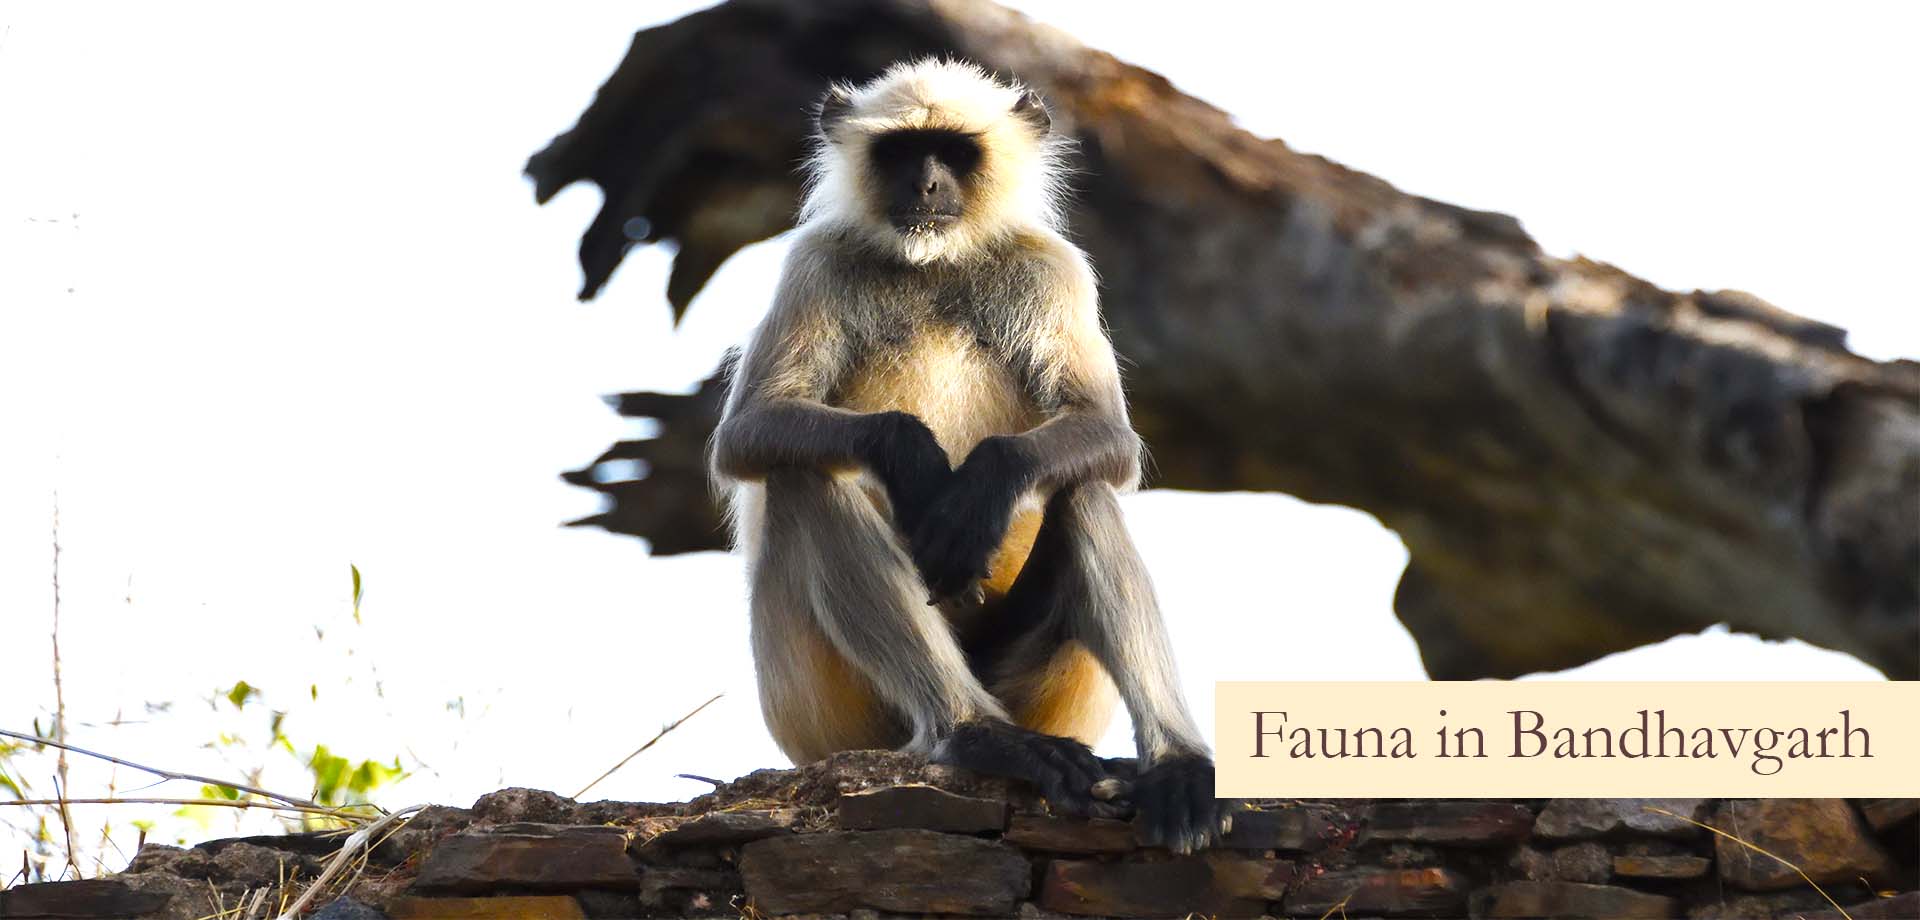 Fauna in Bandhavgarh